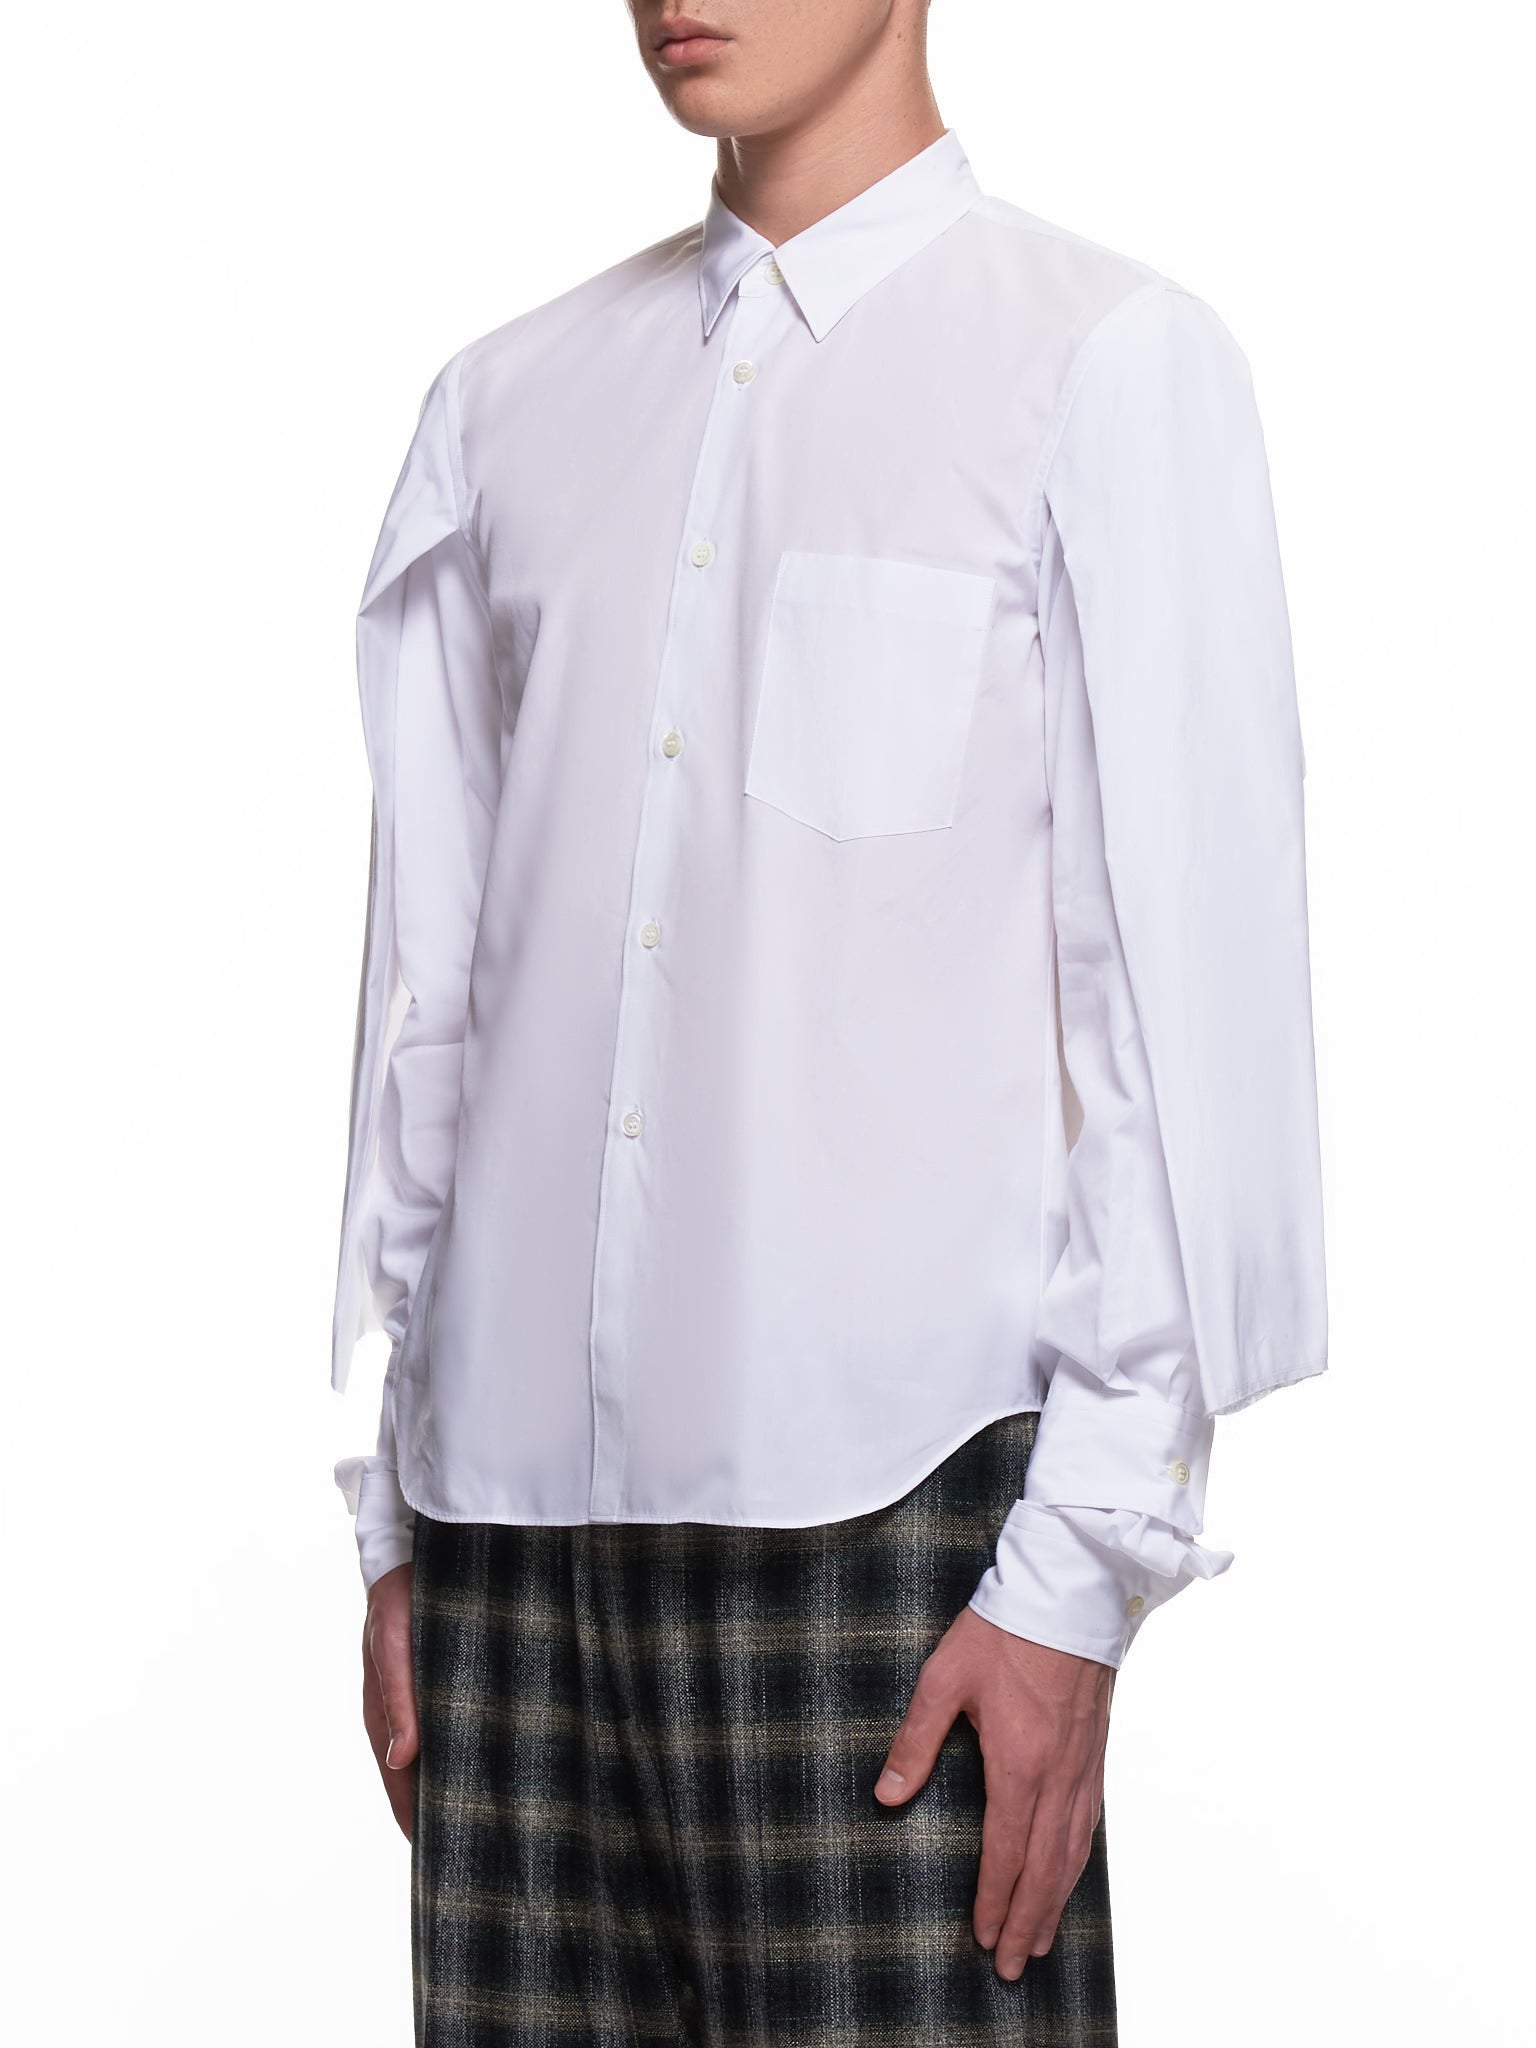 (PF-B007-051-WHITE) Sleeve Layered Button-Up Shirt